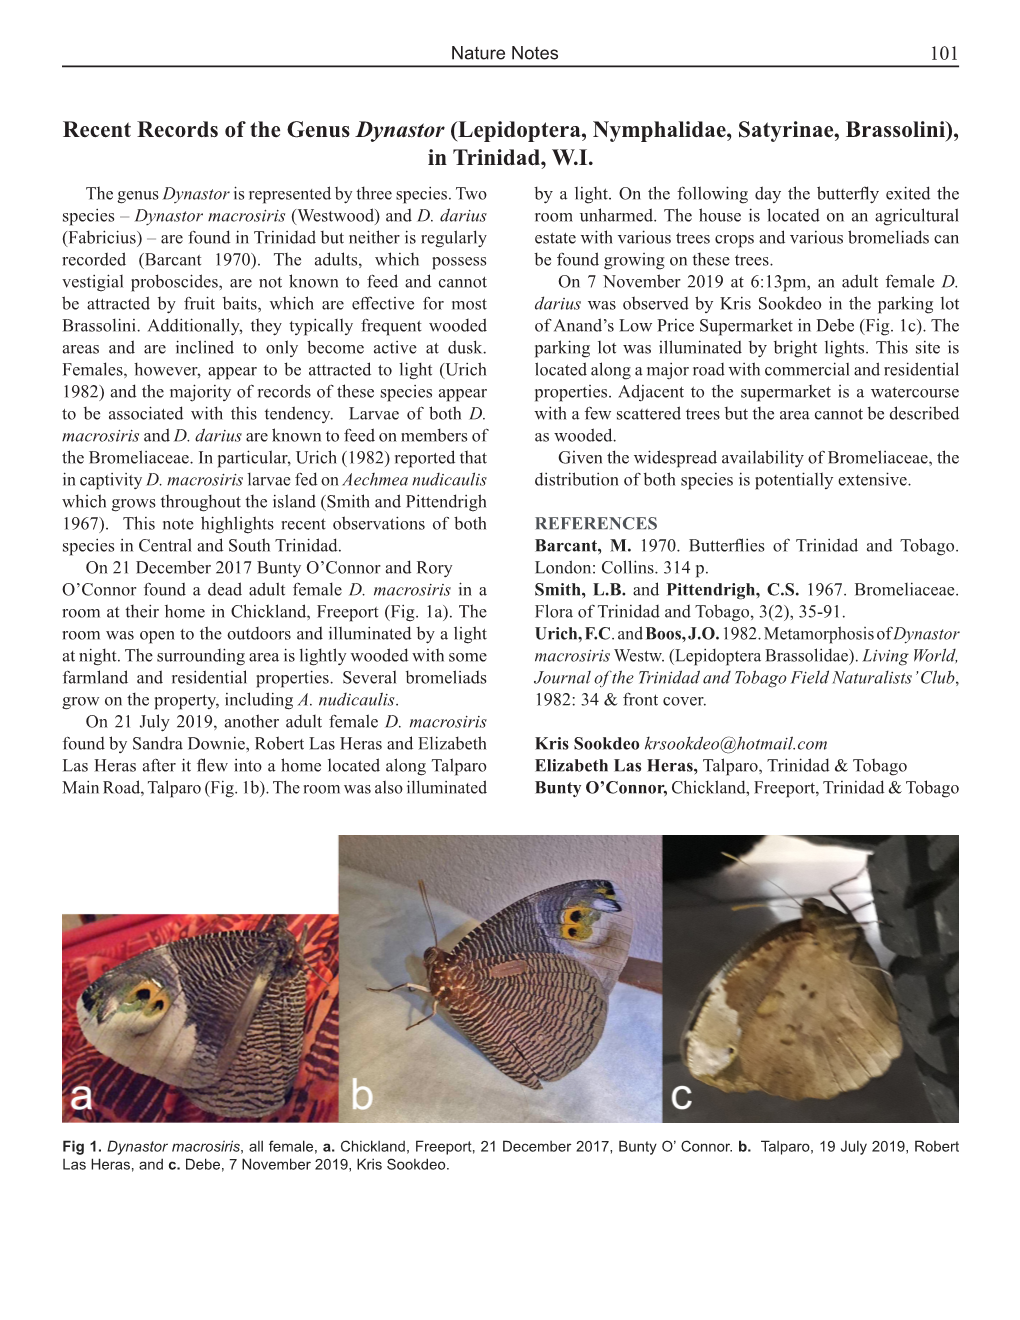 Recent Records of the Genus Dynastor (Lepidoptera, Nymphalidae, Satyrinae, Brassolini), in Trinidad, W.I